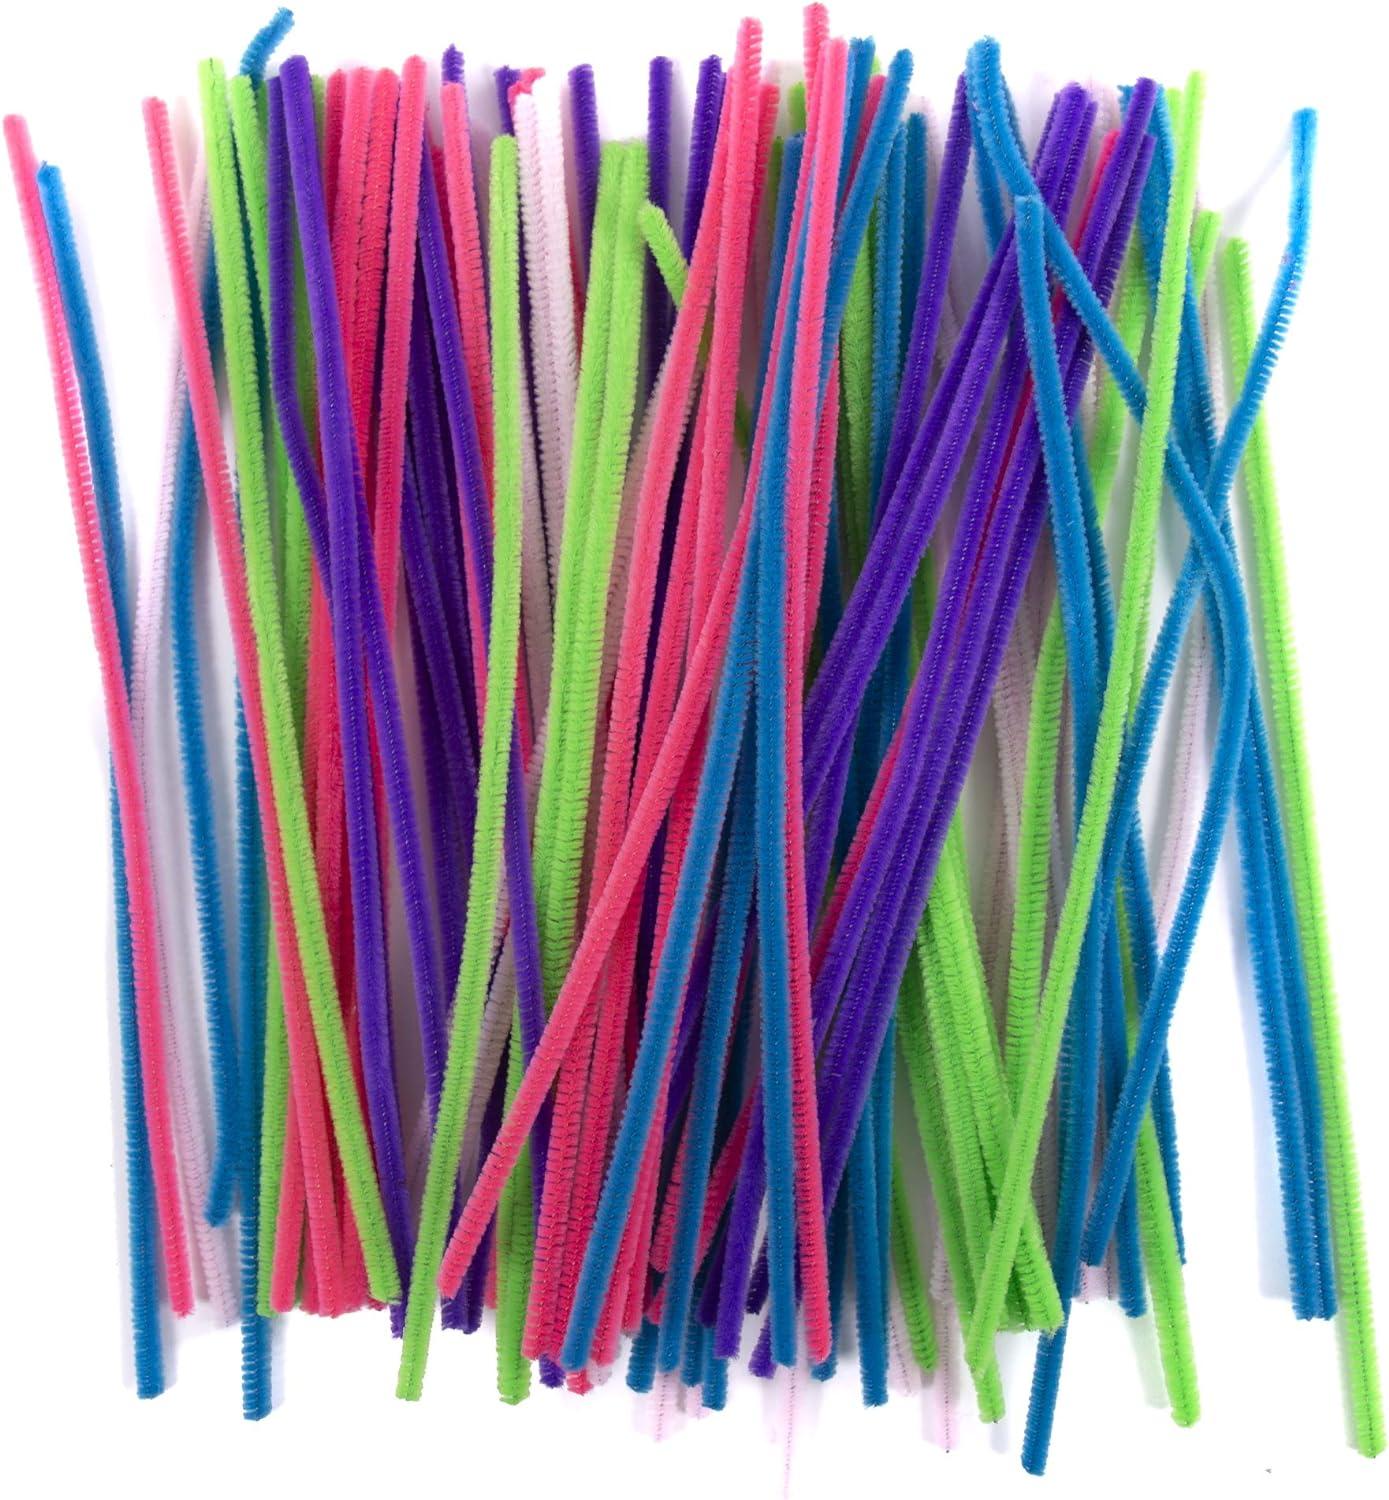 Horizon Fuzzy Sticks, Assorted Neon Colors, (2) 100 Pack, 12